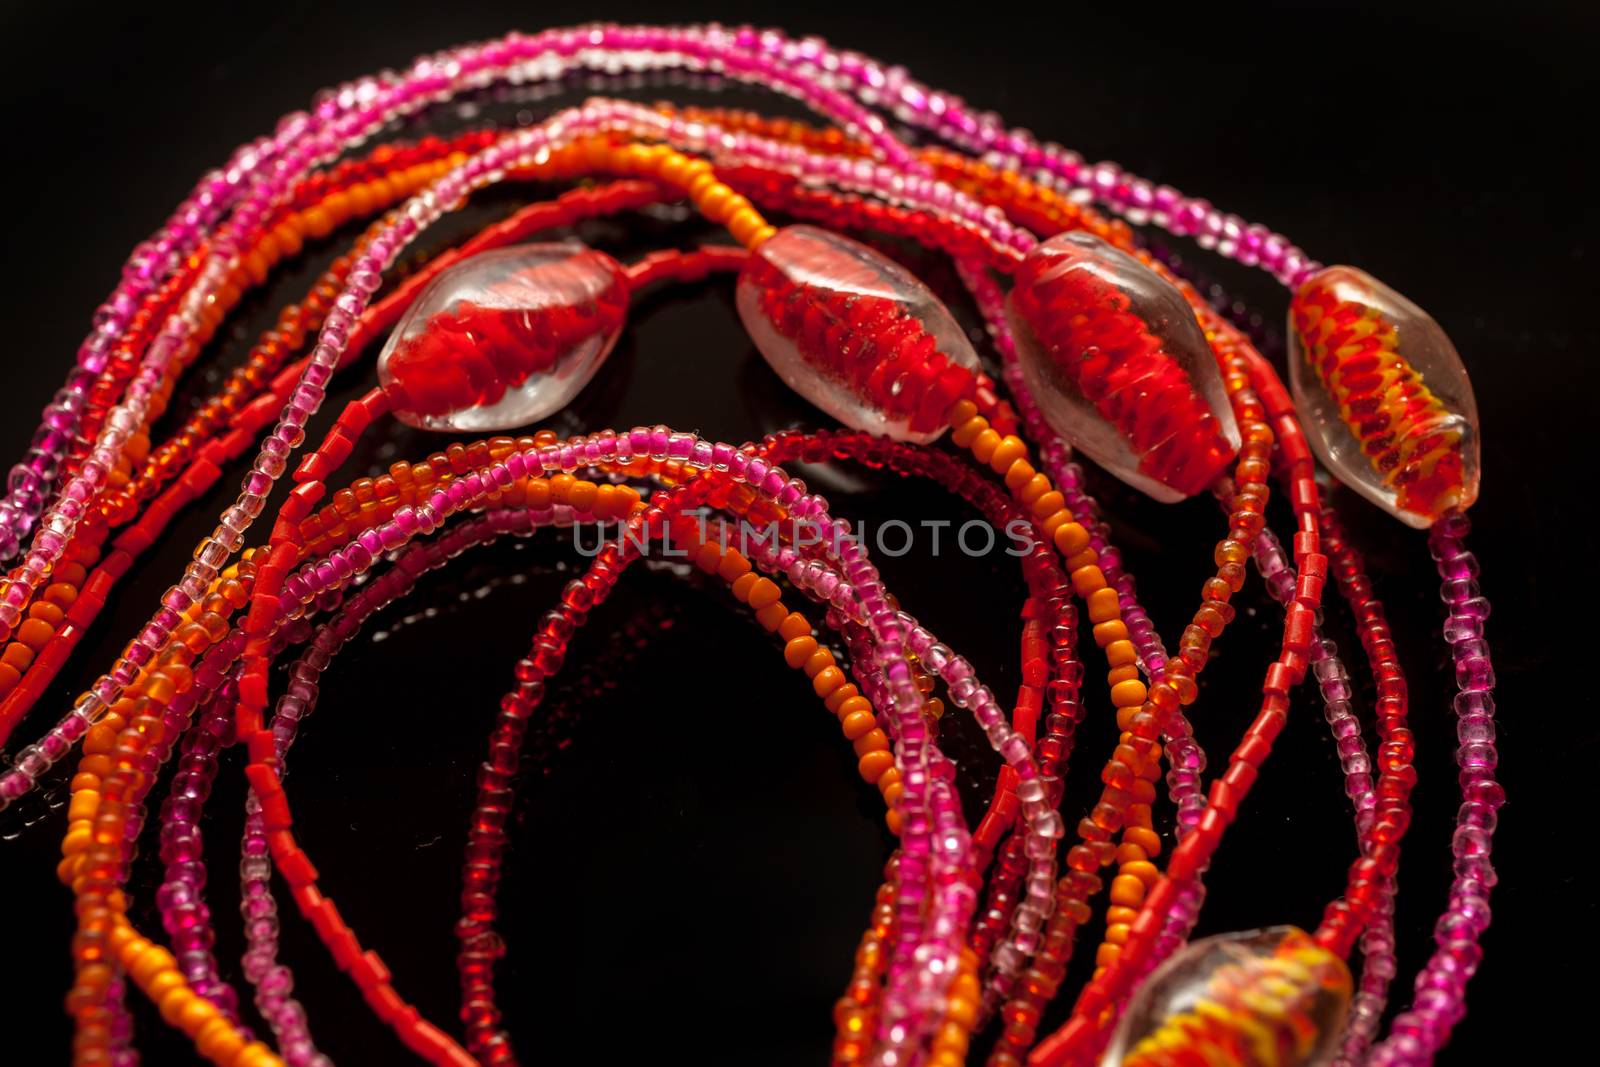 Jewelry of beads by Portokalis